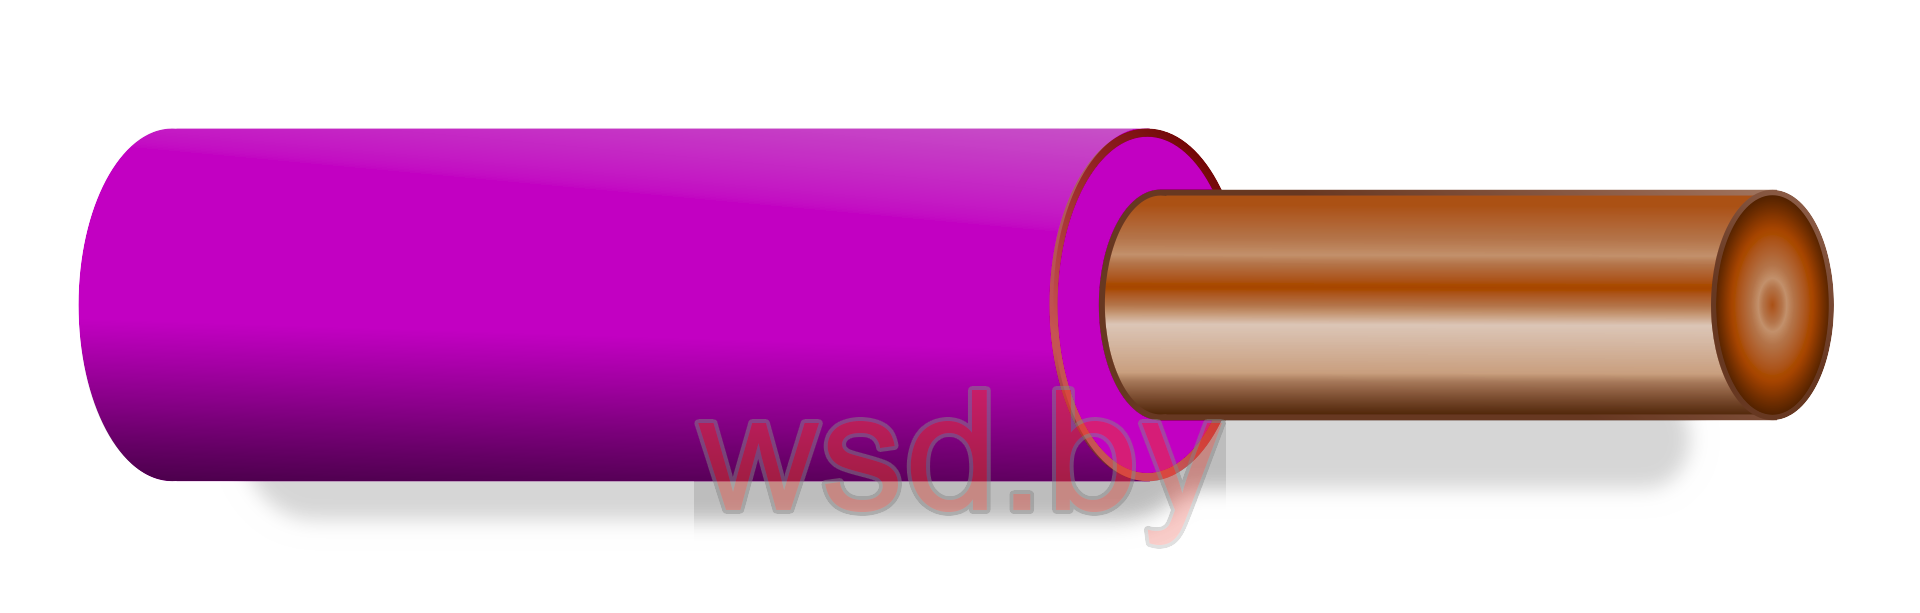 Провод ПуВ 1х1,5 фиолетовый